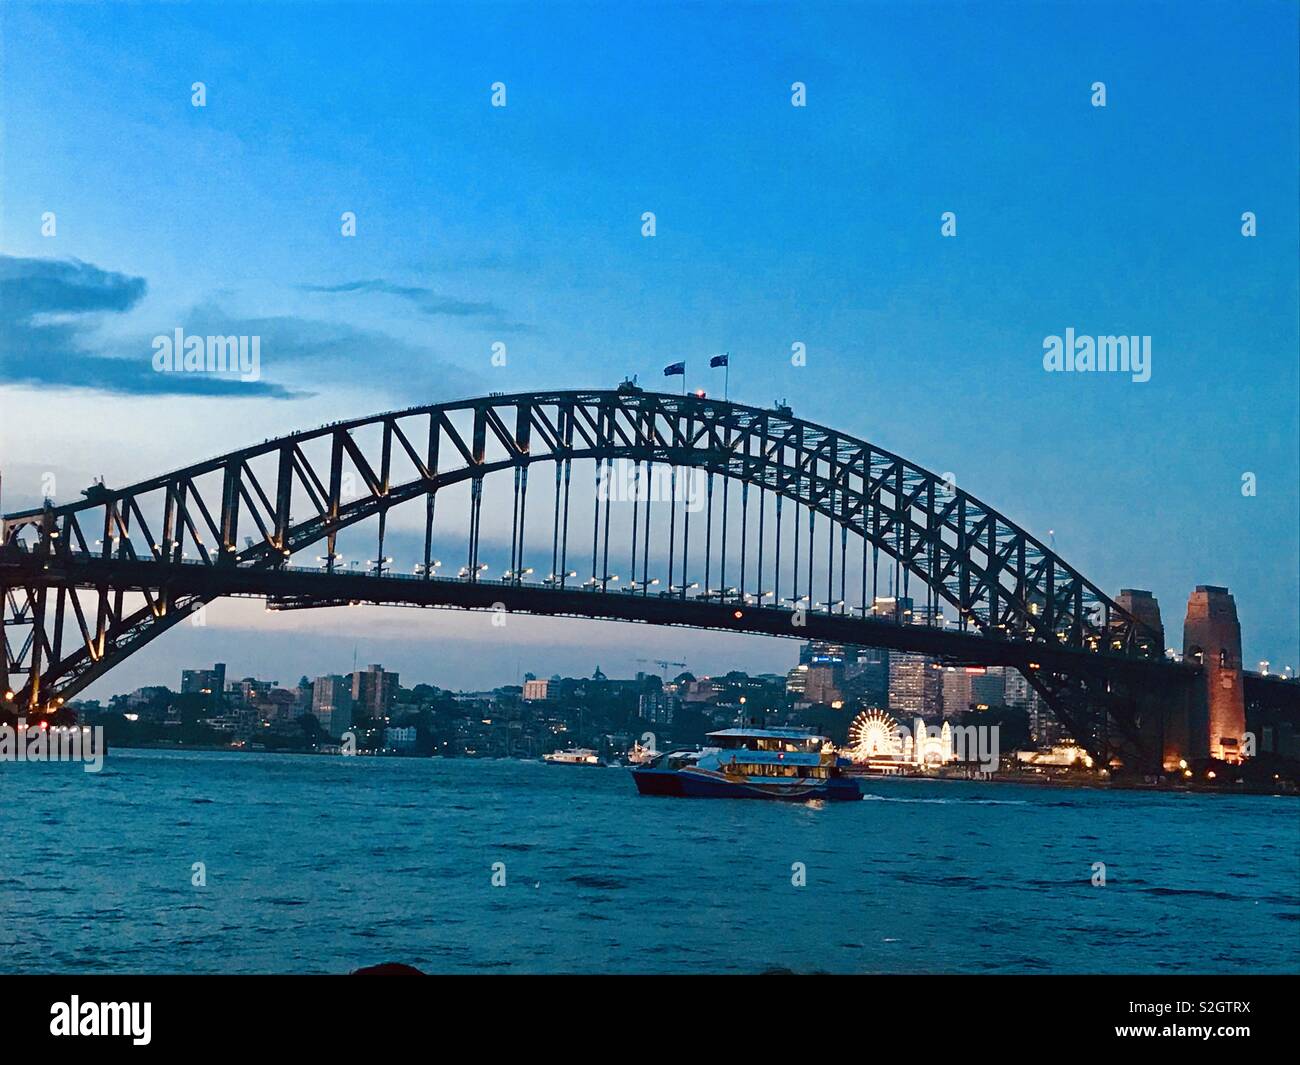 The iconic Sydney Harbour Bridge in New South Wales, Australia Stock Photo